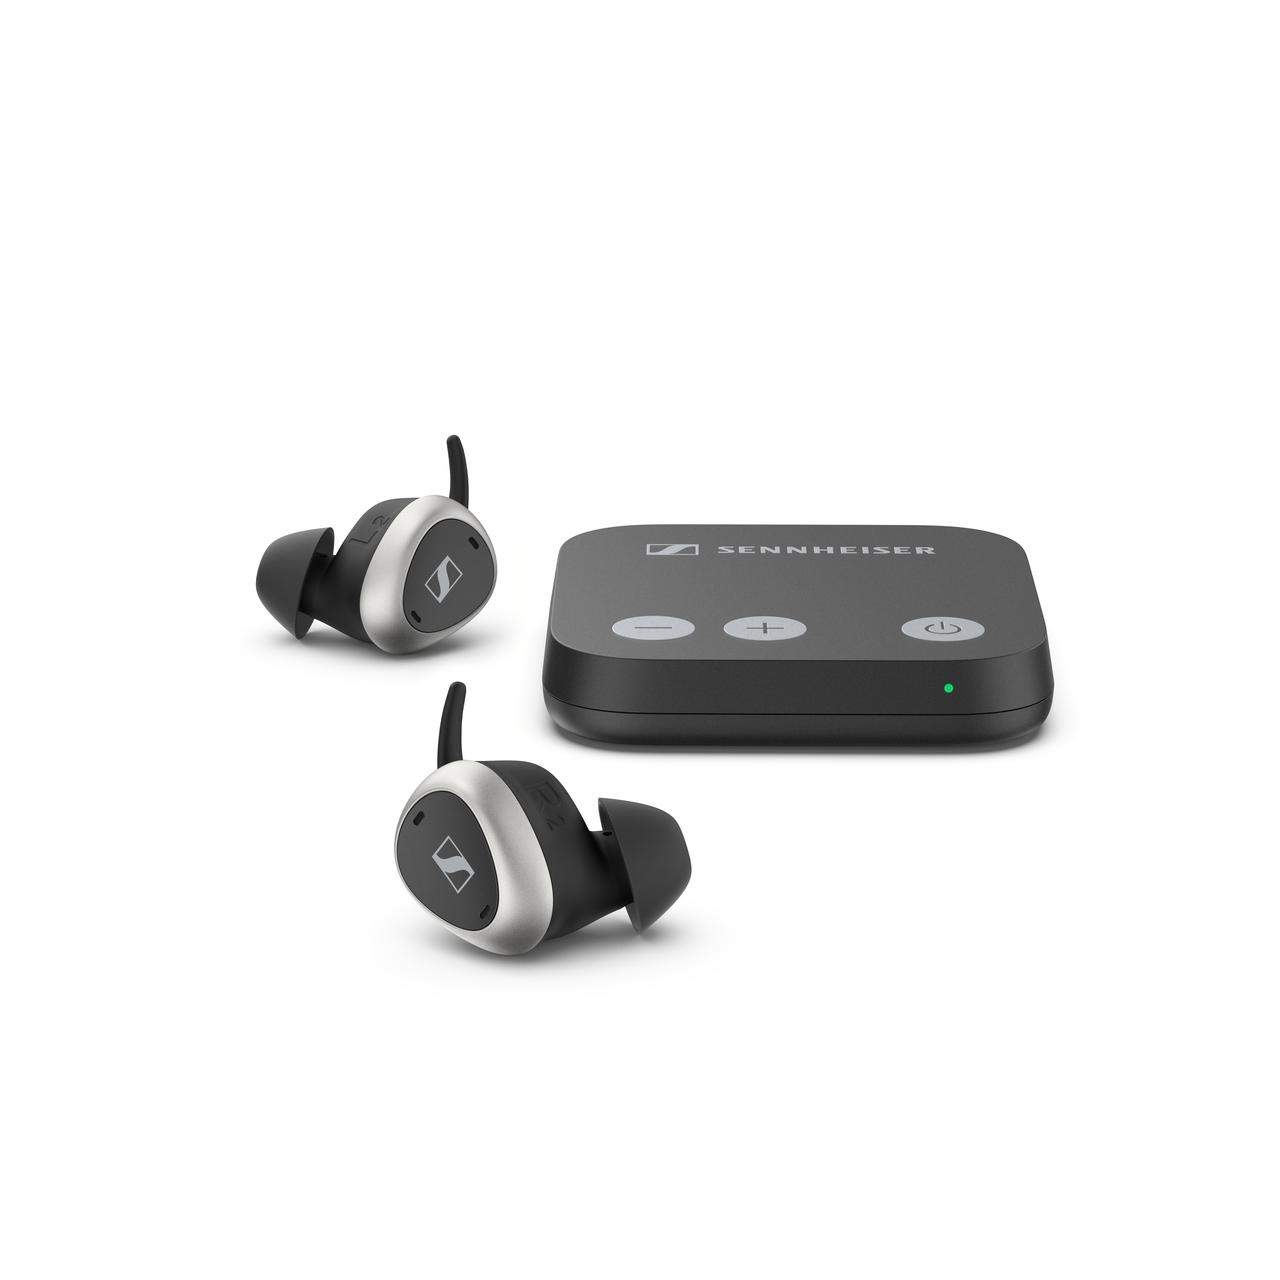 Sennheiser Set 860 Wireless Headphones - TV headset